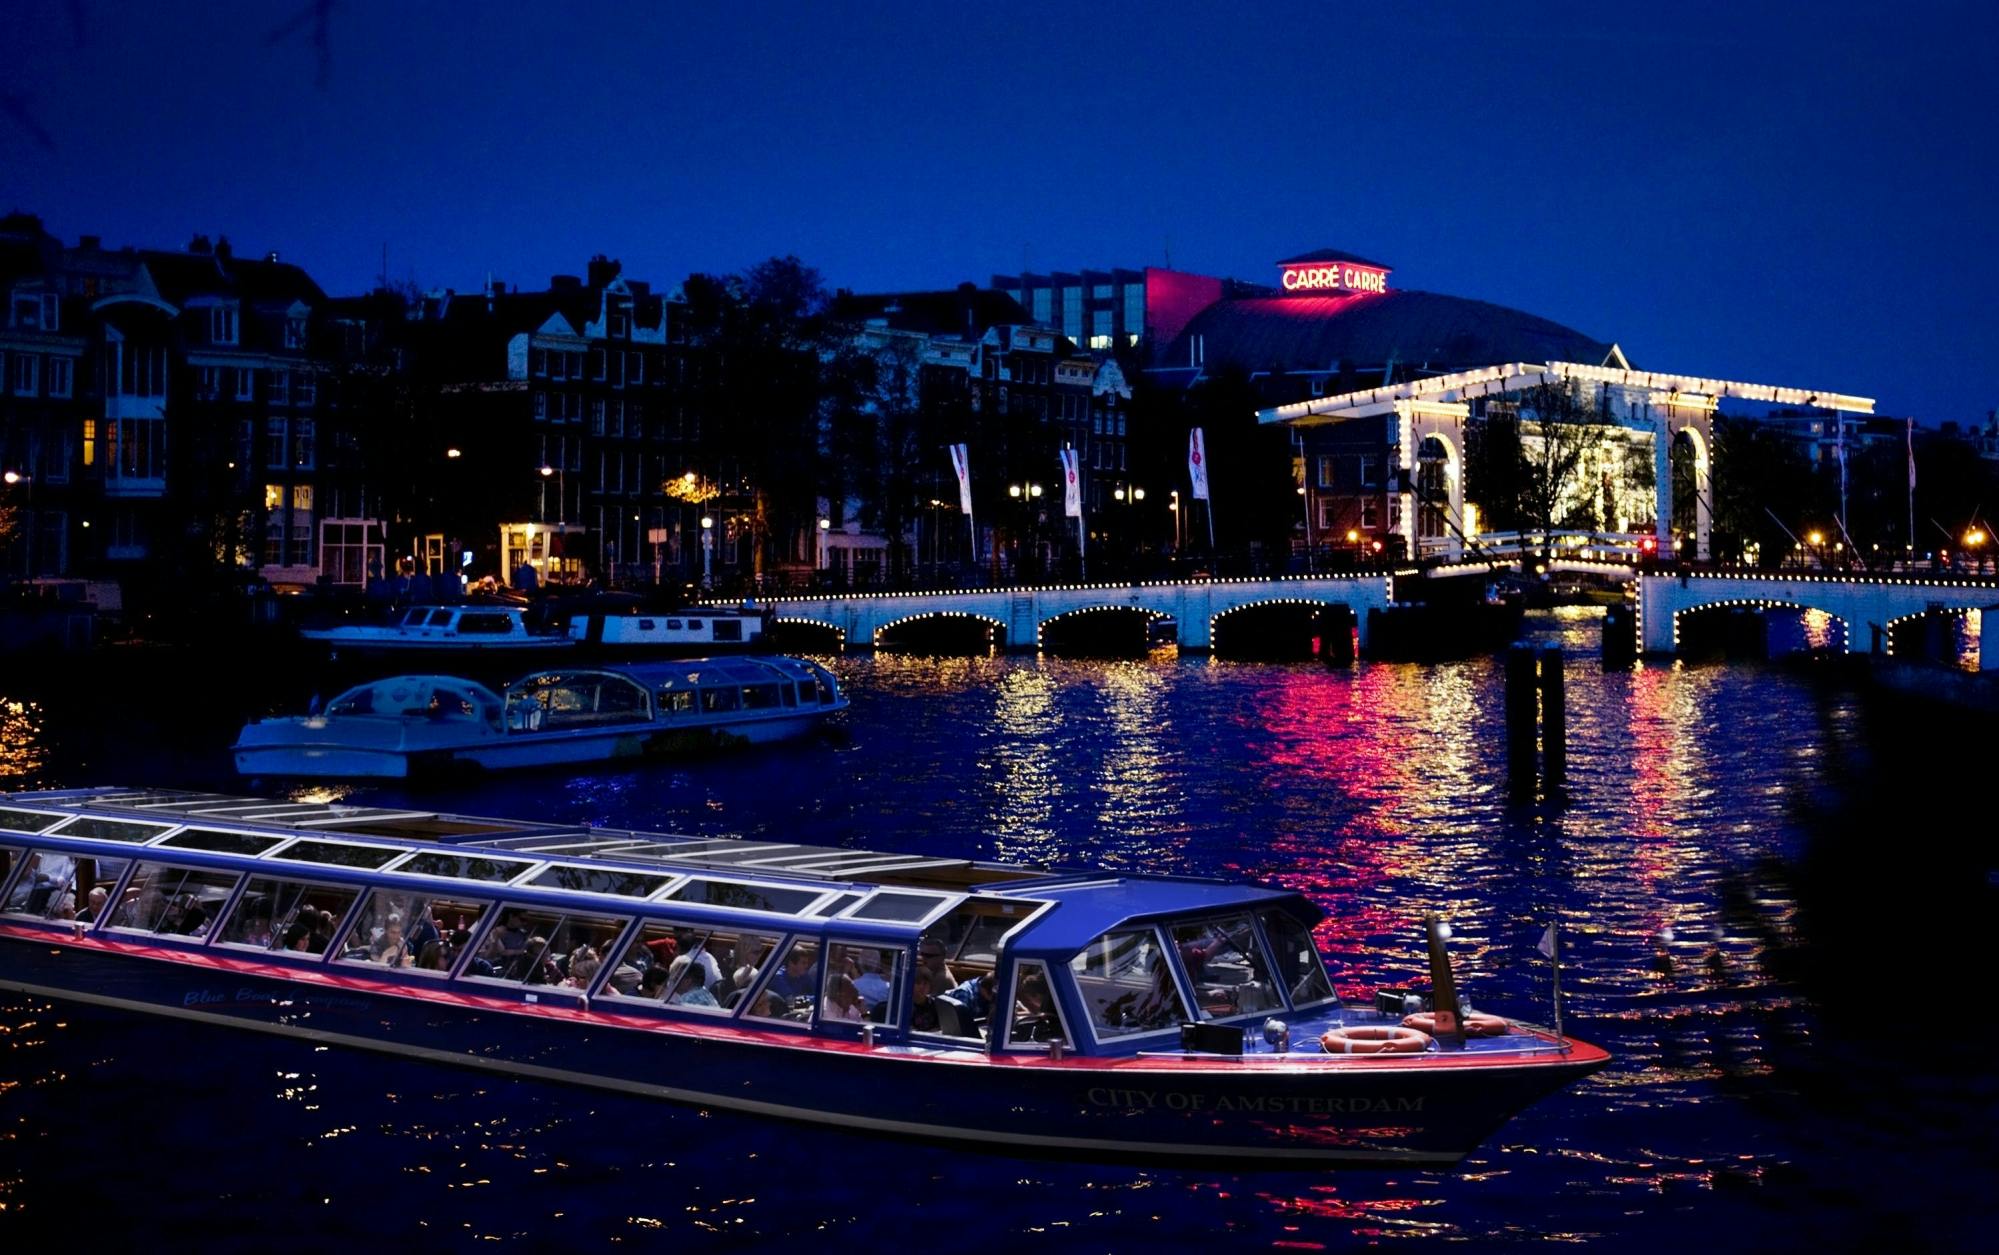 Giro in barca serale sui canali di Amsterdam di 1,5 ore